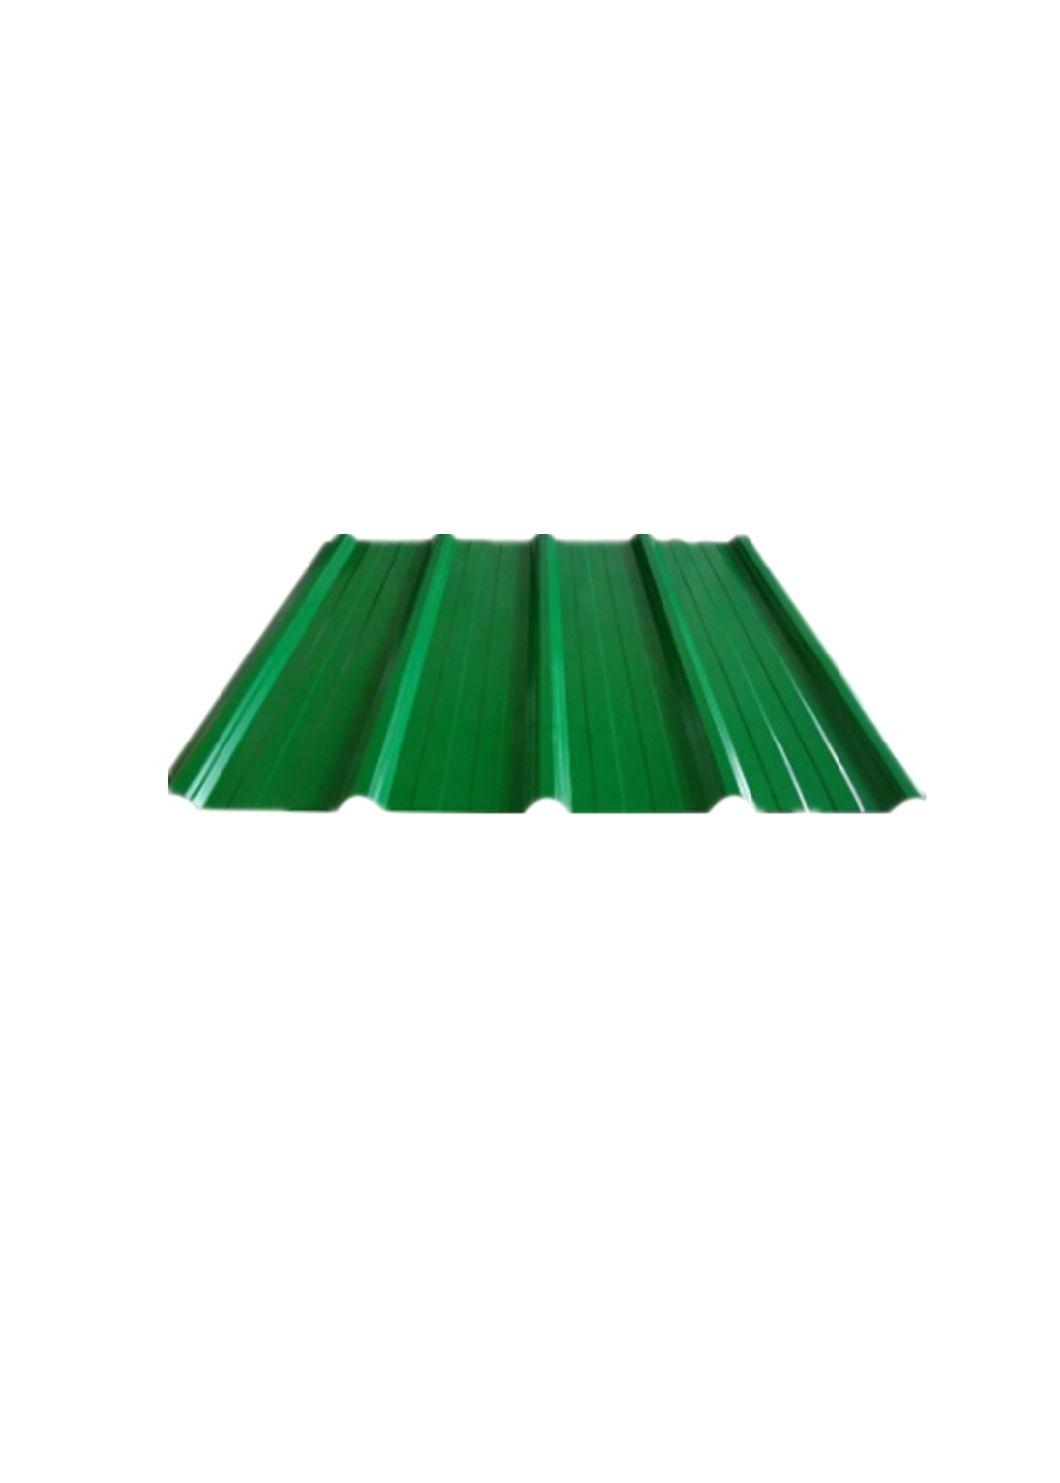 Iron Zinc Steel Sheet Prepainted G40 Galvanized Roofing Sheet Dx51d PPGI PPGL Corrugated Metal Plate